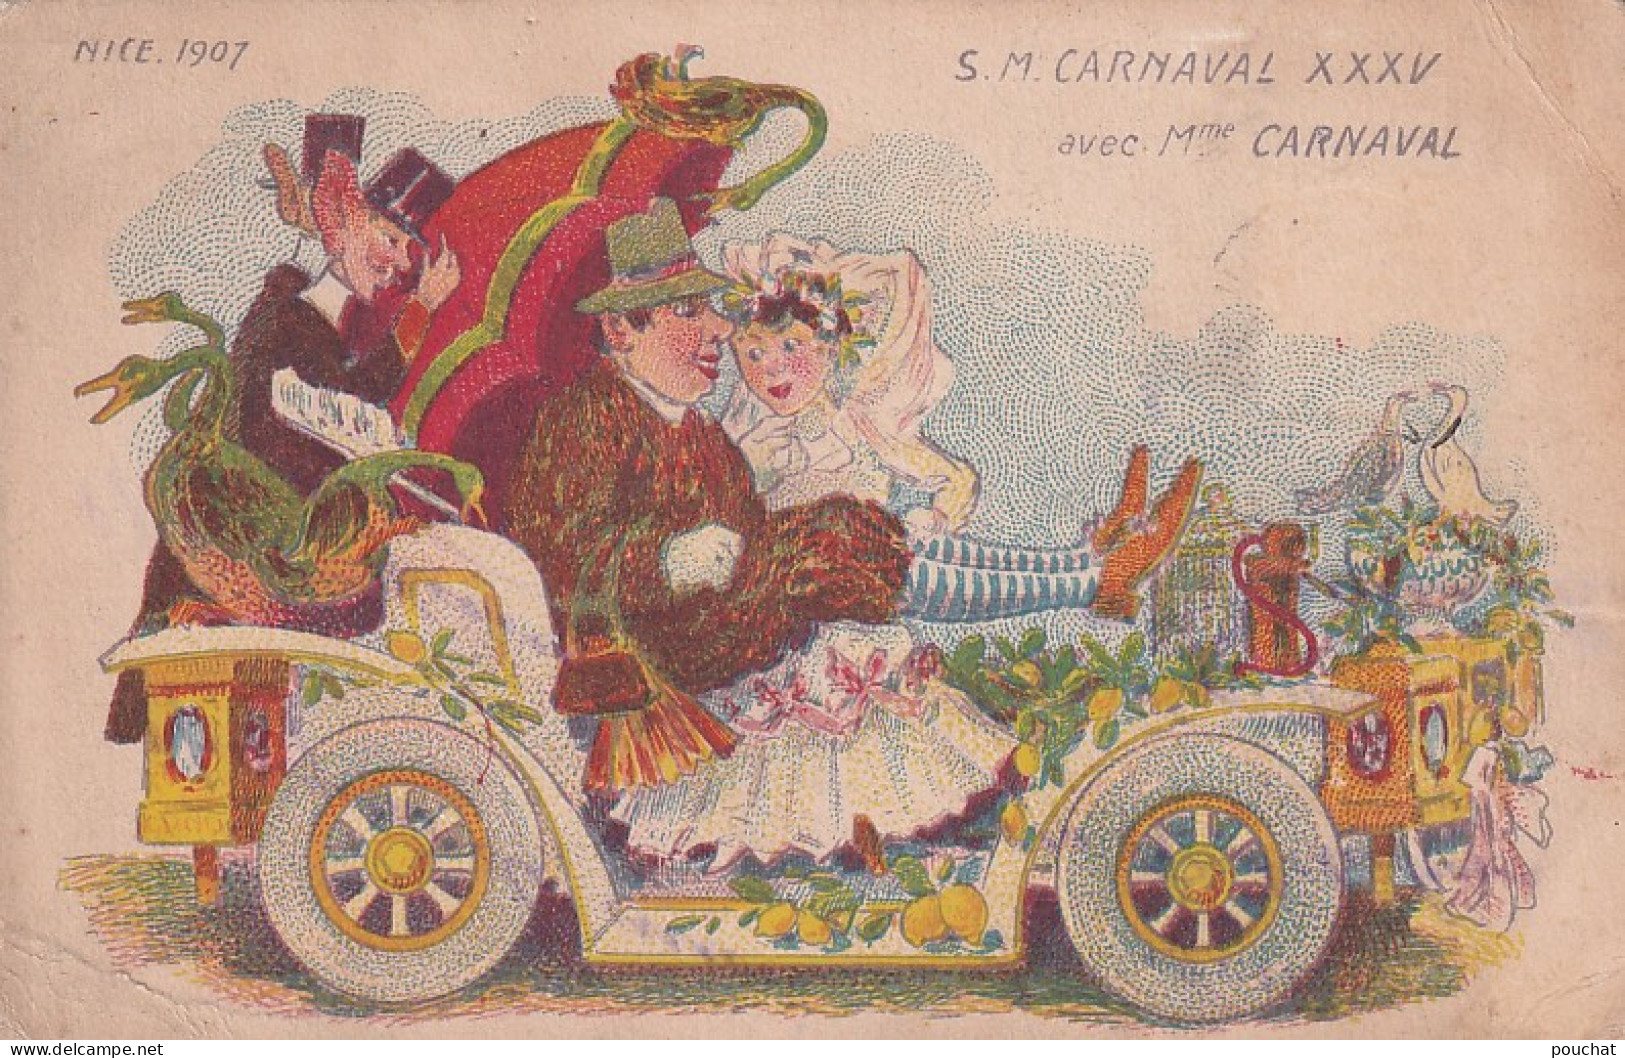 KO 27-(06) NICE 1907 - S. M. CARNAVAL XXXV AVEC Mme CARNAVAL - ILLUSTRATEUR - Carnevale